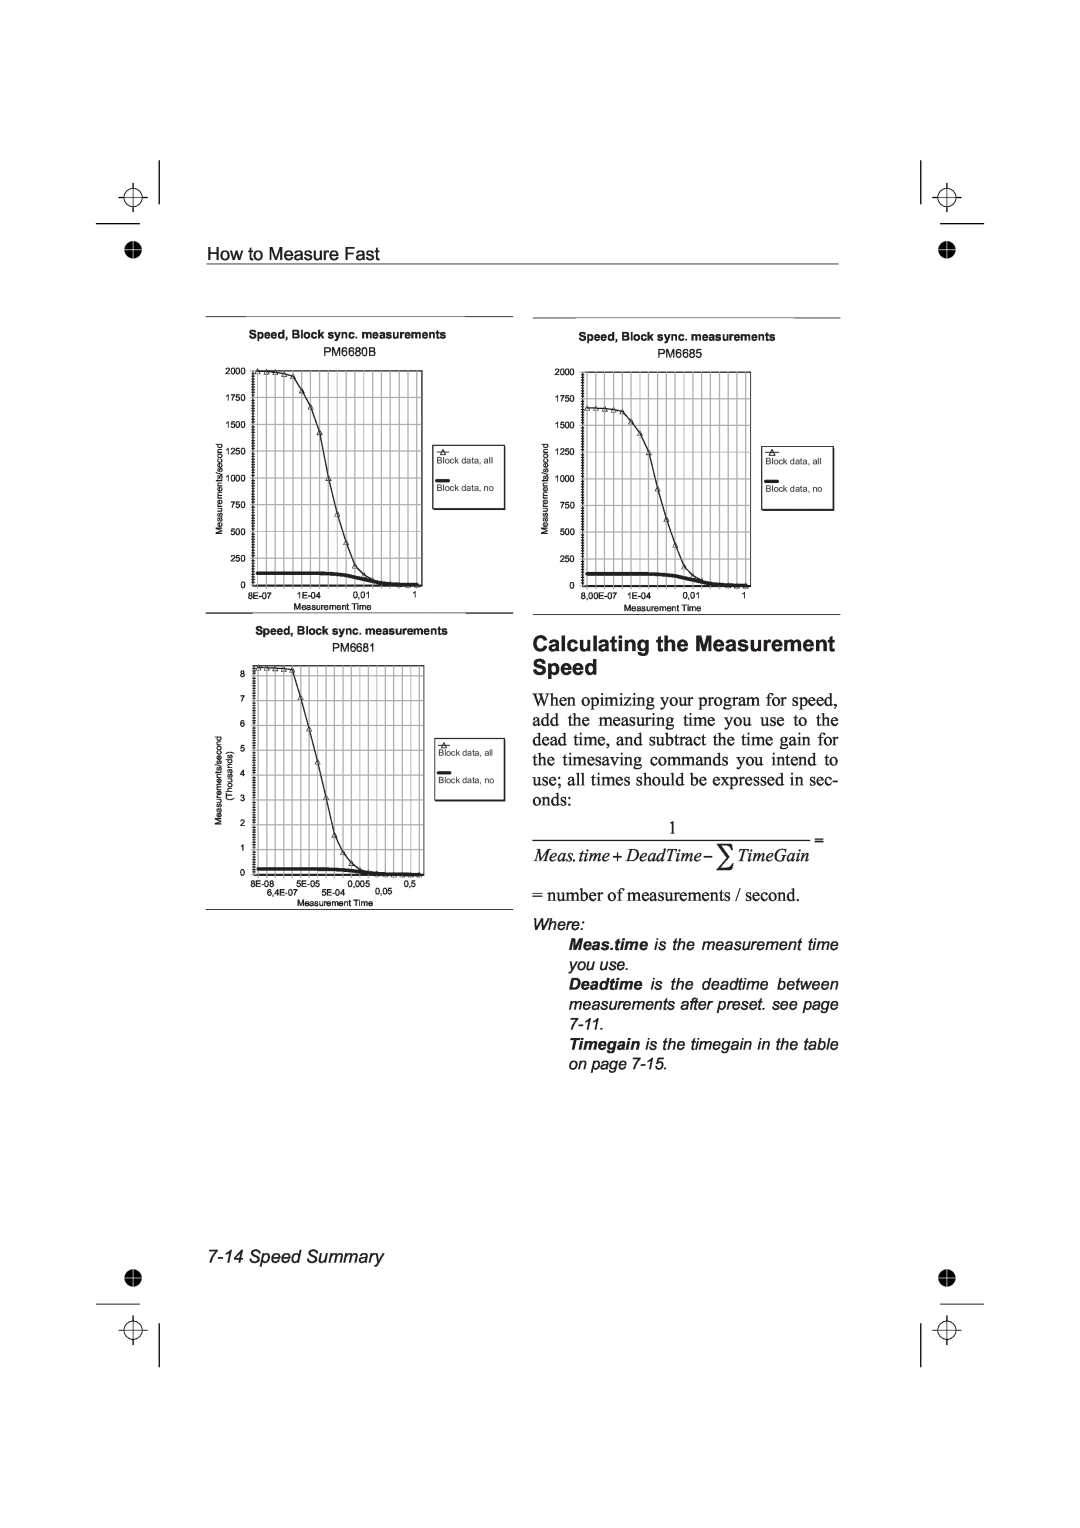 Fluke PM6681R Calculating the Measurement, Meas . time DeadTime TimeGain, Speed Summary, S p e e d , B l o c k s y n c 